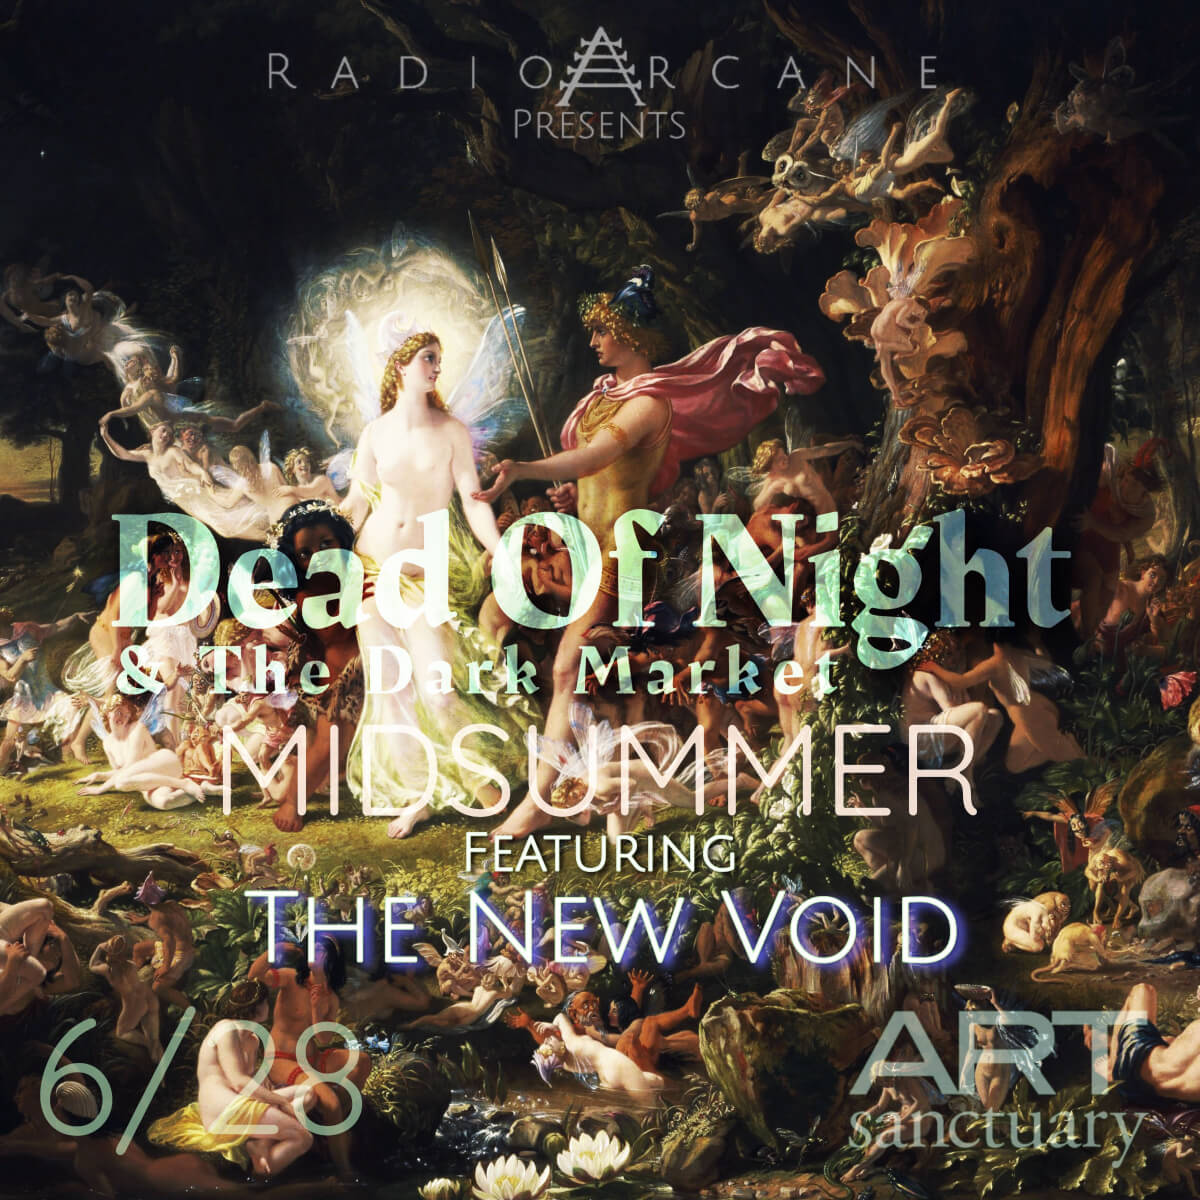 Dead Of Night & The Dark Market - Midsummer feat. The New Void